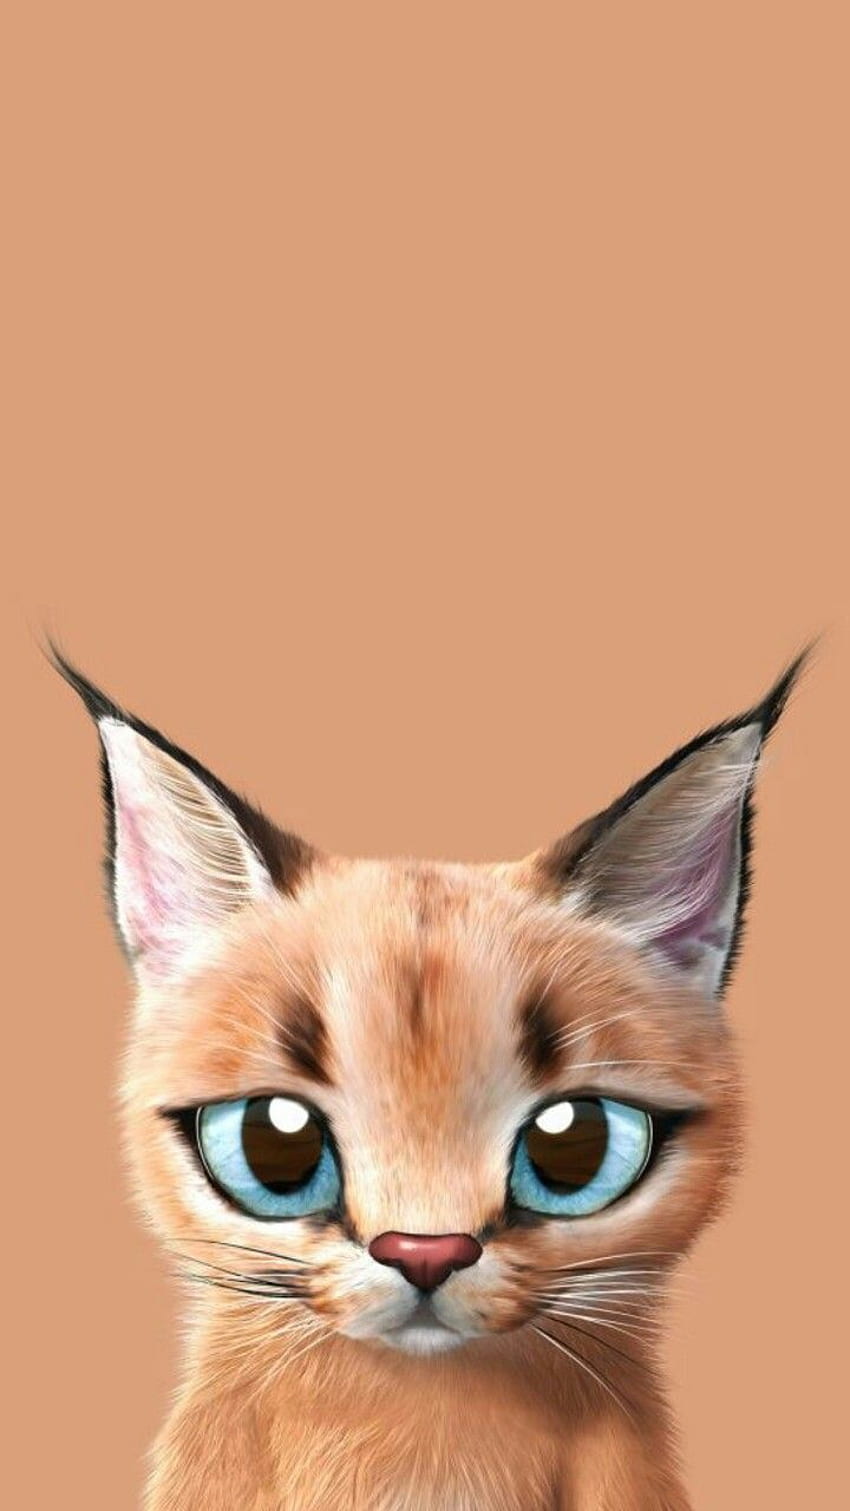 Download Cat Animal Anime RoyaltyFree Vector Graphic  Pixabay